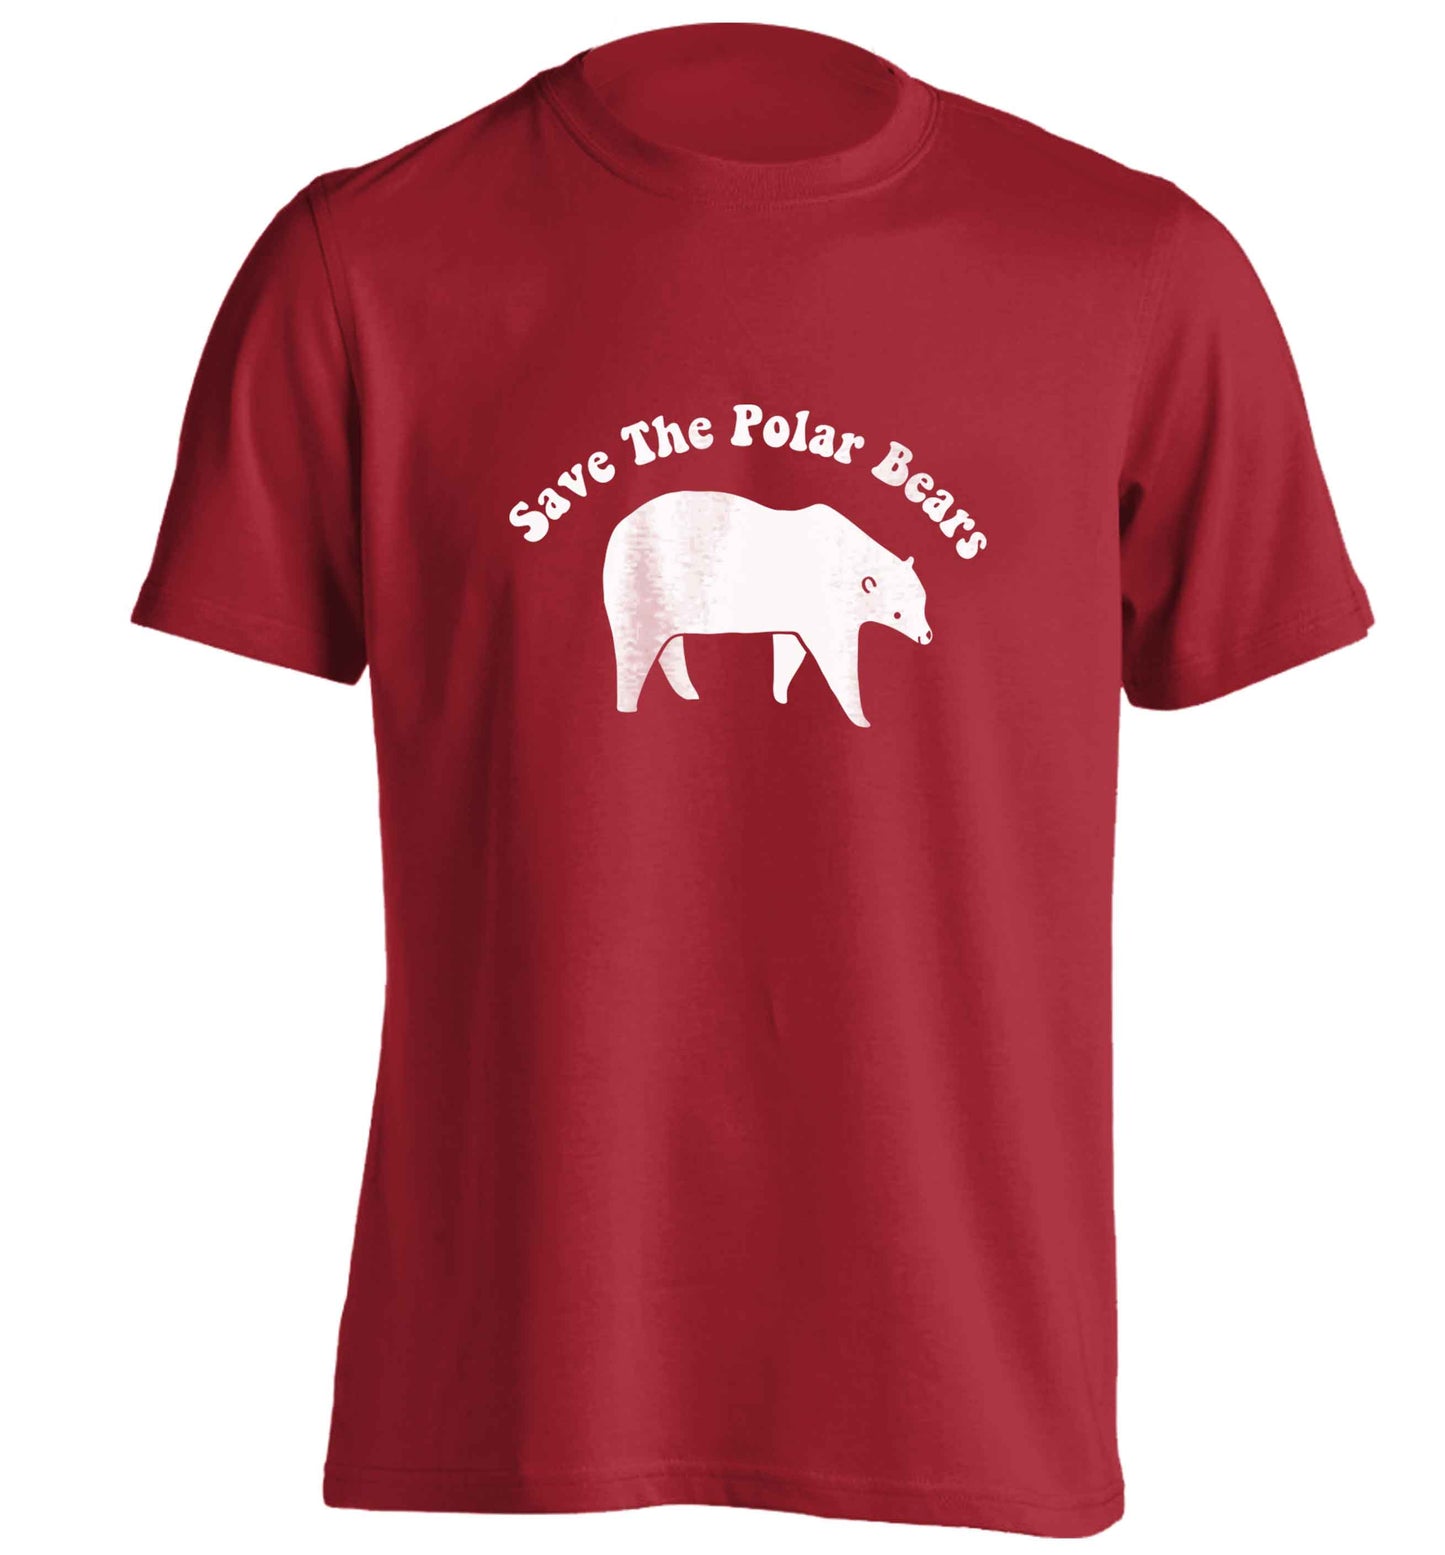 Save The Polar Bears adults unisex red Tshirt 2XL